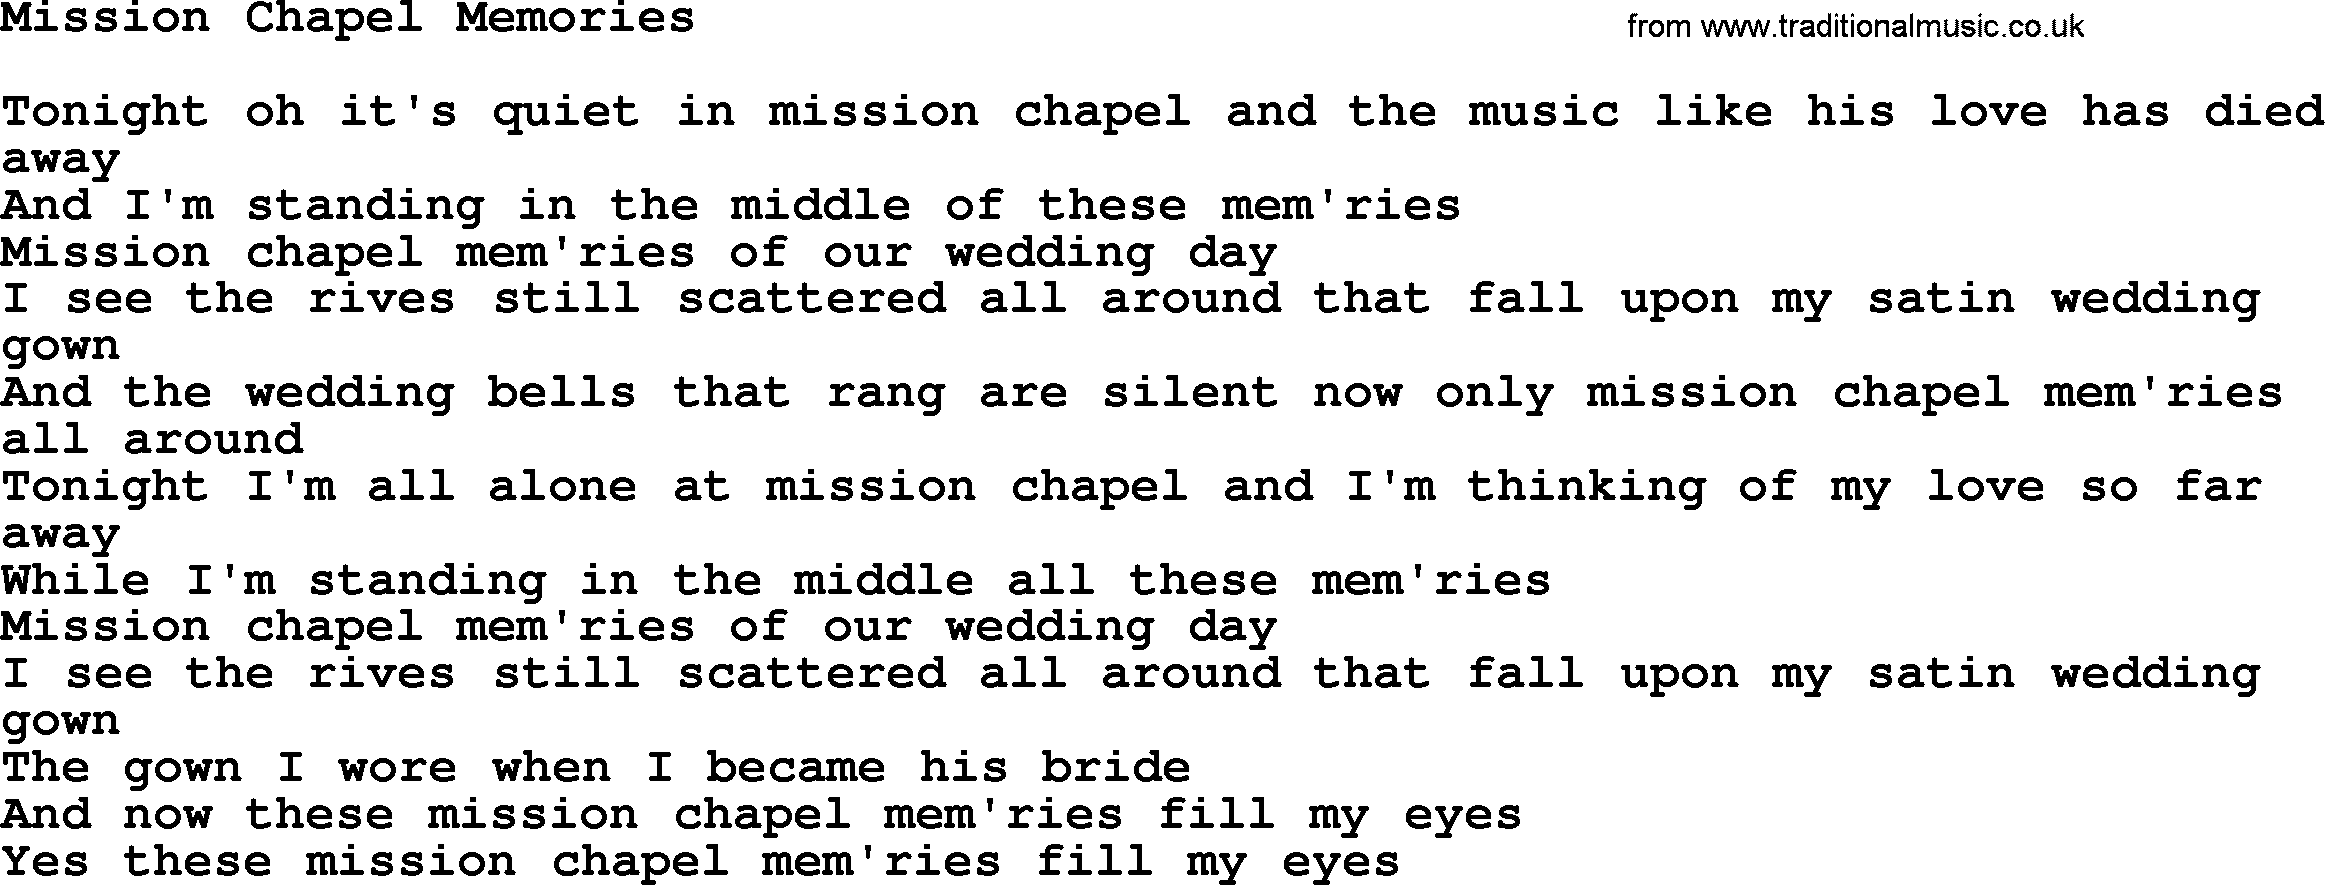 Dolly Parton song Mission Chapel Memories.txt lyrics